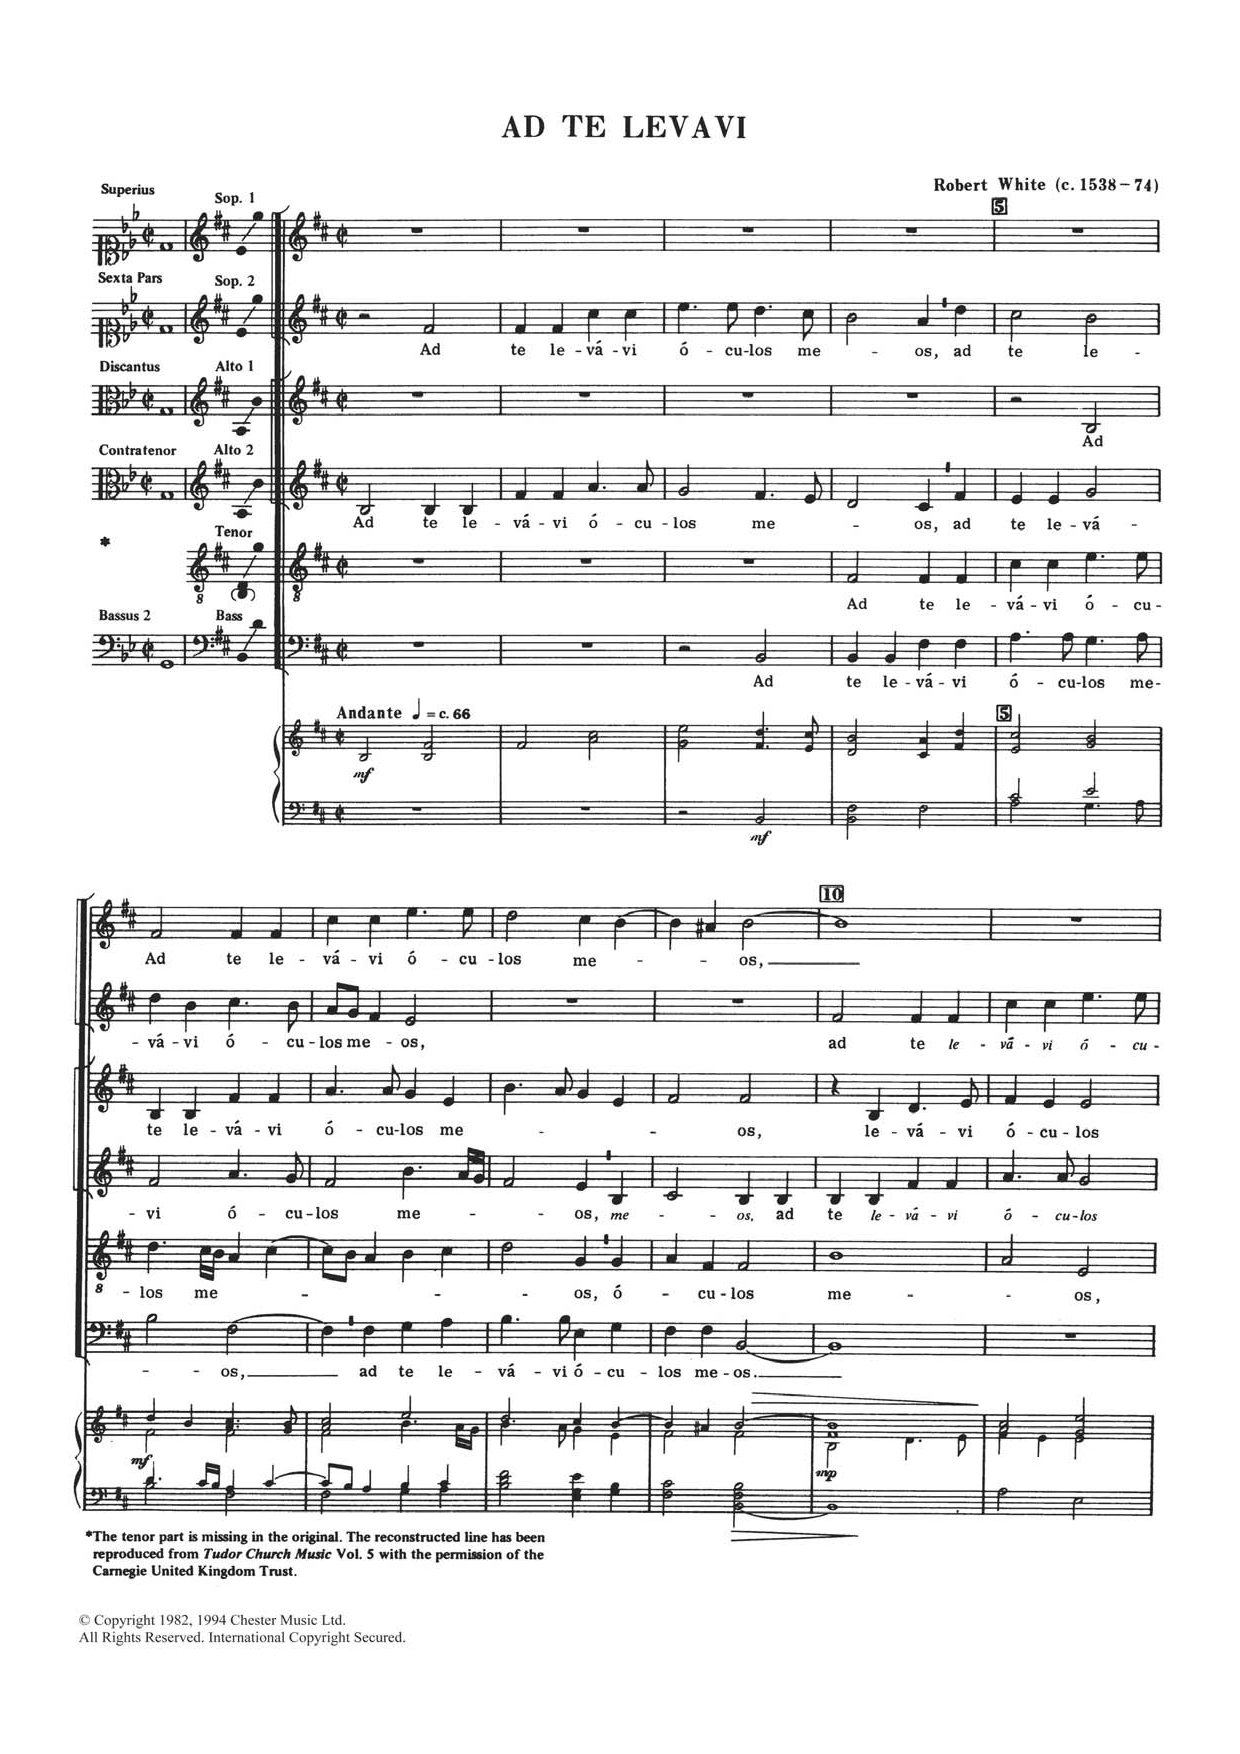 Robert White Ad Te Levavi Sheet Music Notes & Chords for Choral SAATB - Download or Print PDF